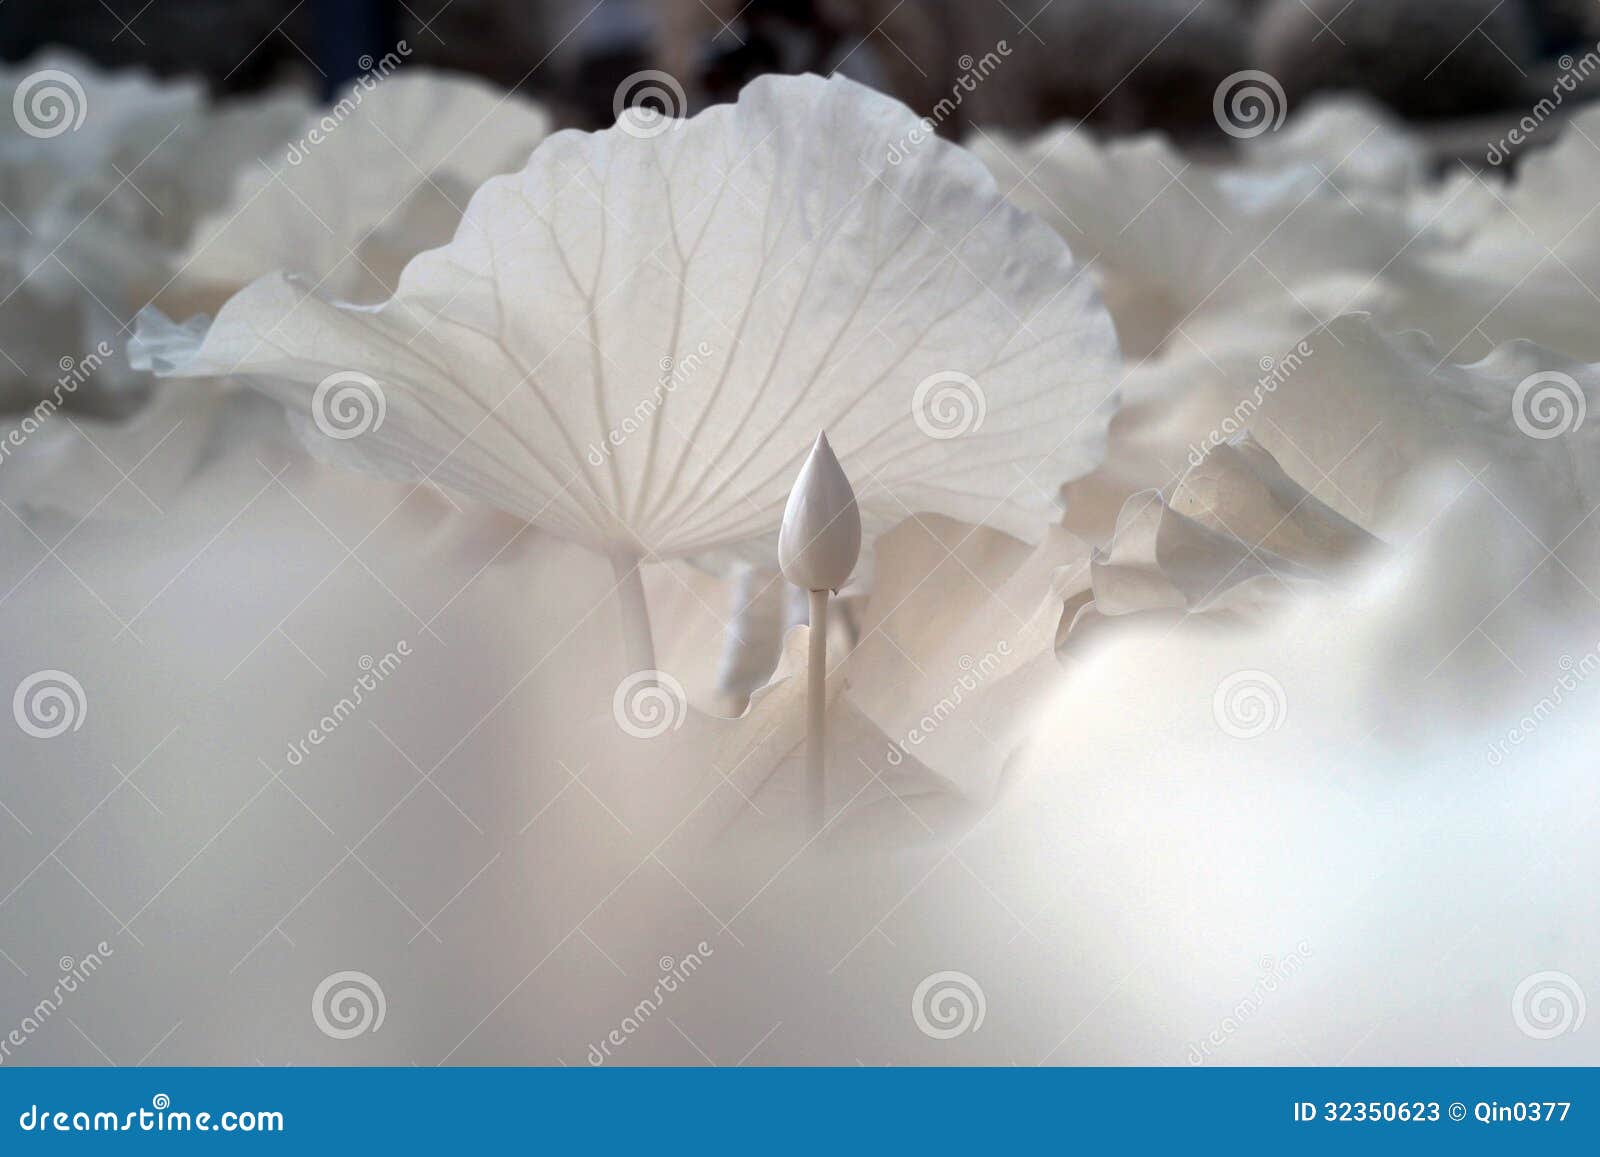 lotus (scientific name: nelumbo nucifera)